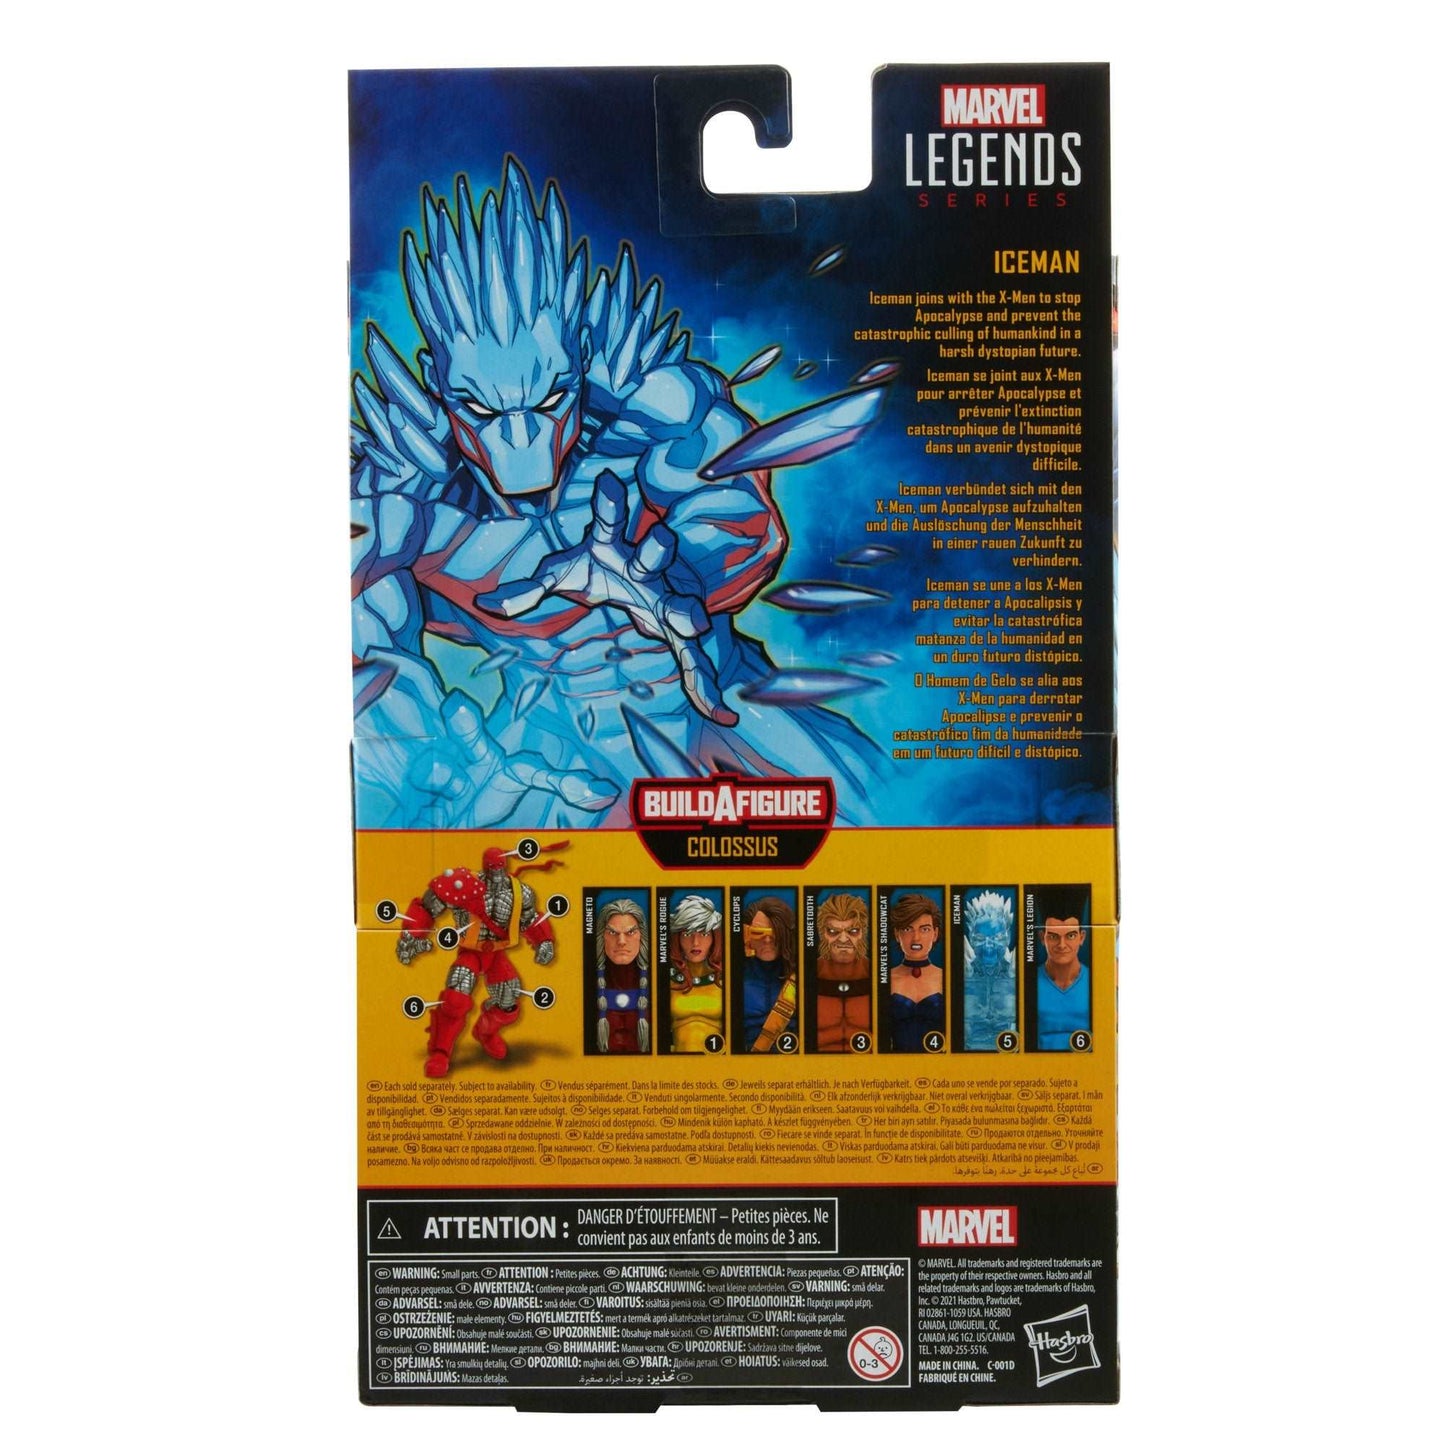 Hasbro Marvel Legends Series X-men Age of Apocalypse Iceman figure in packaging back of box